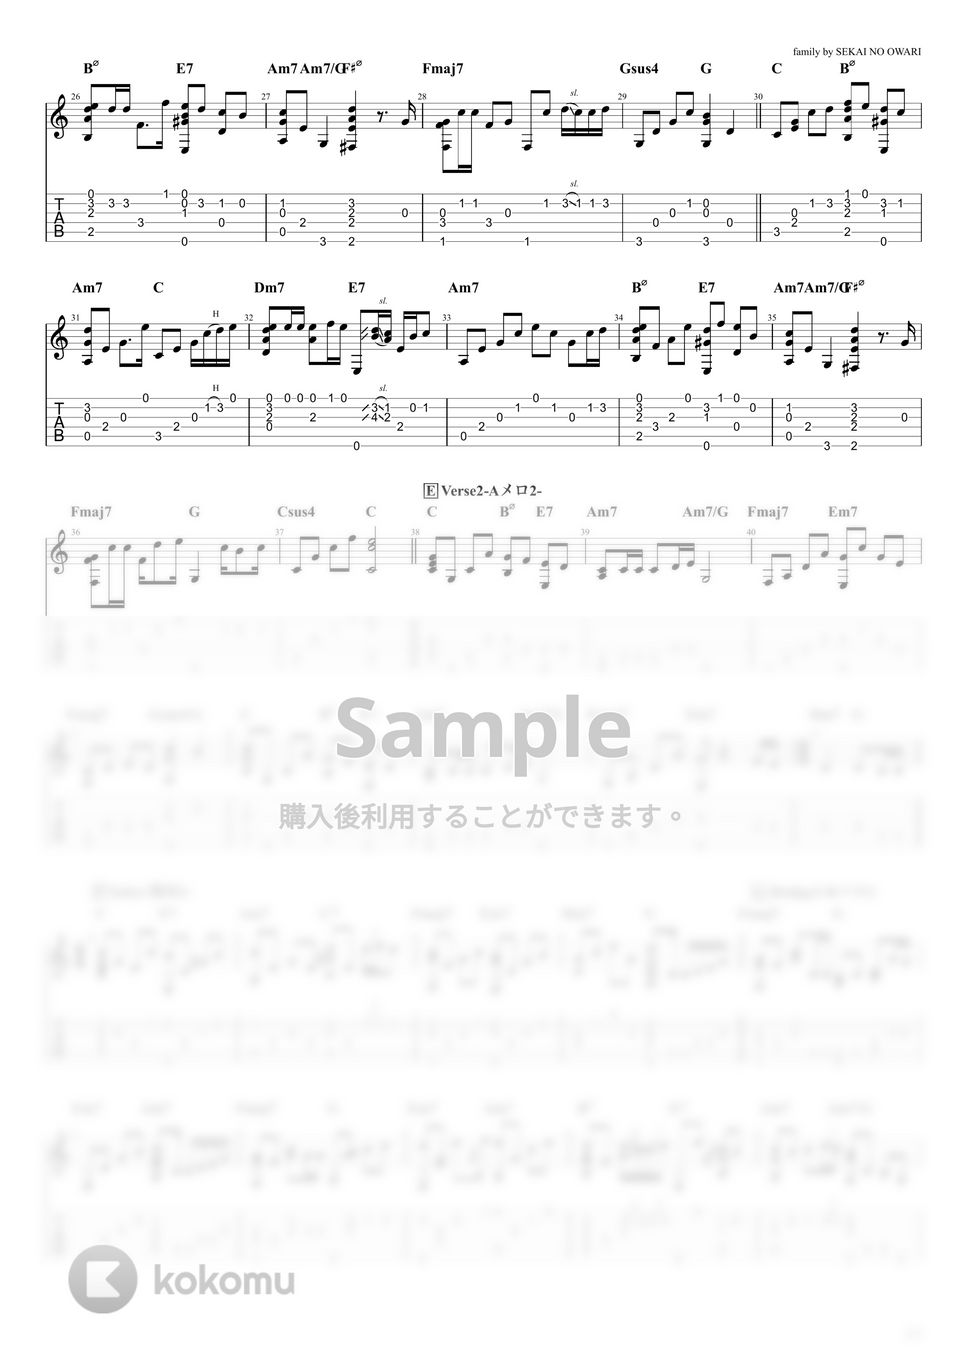 SEKAI NO OWARI - family (ソロギター) by たまごどり